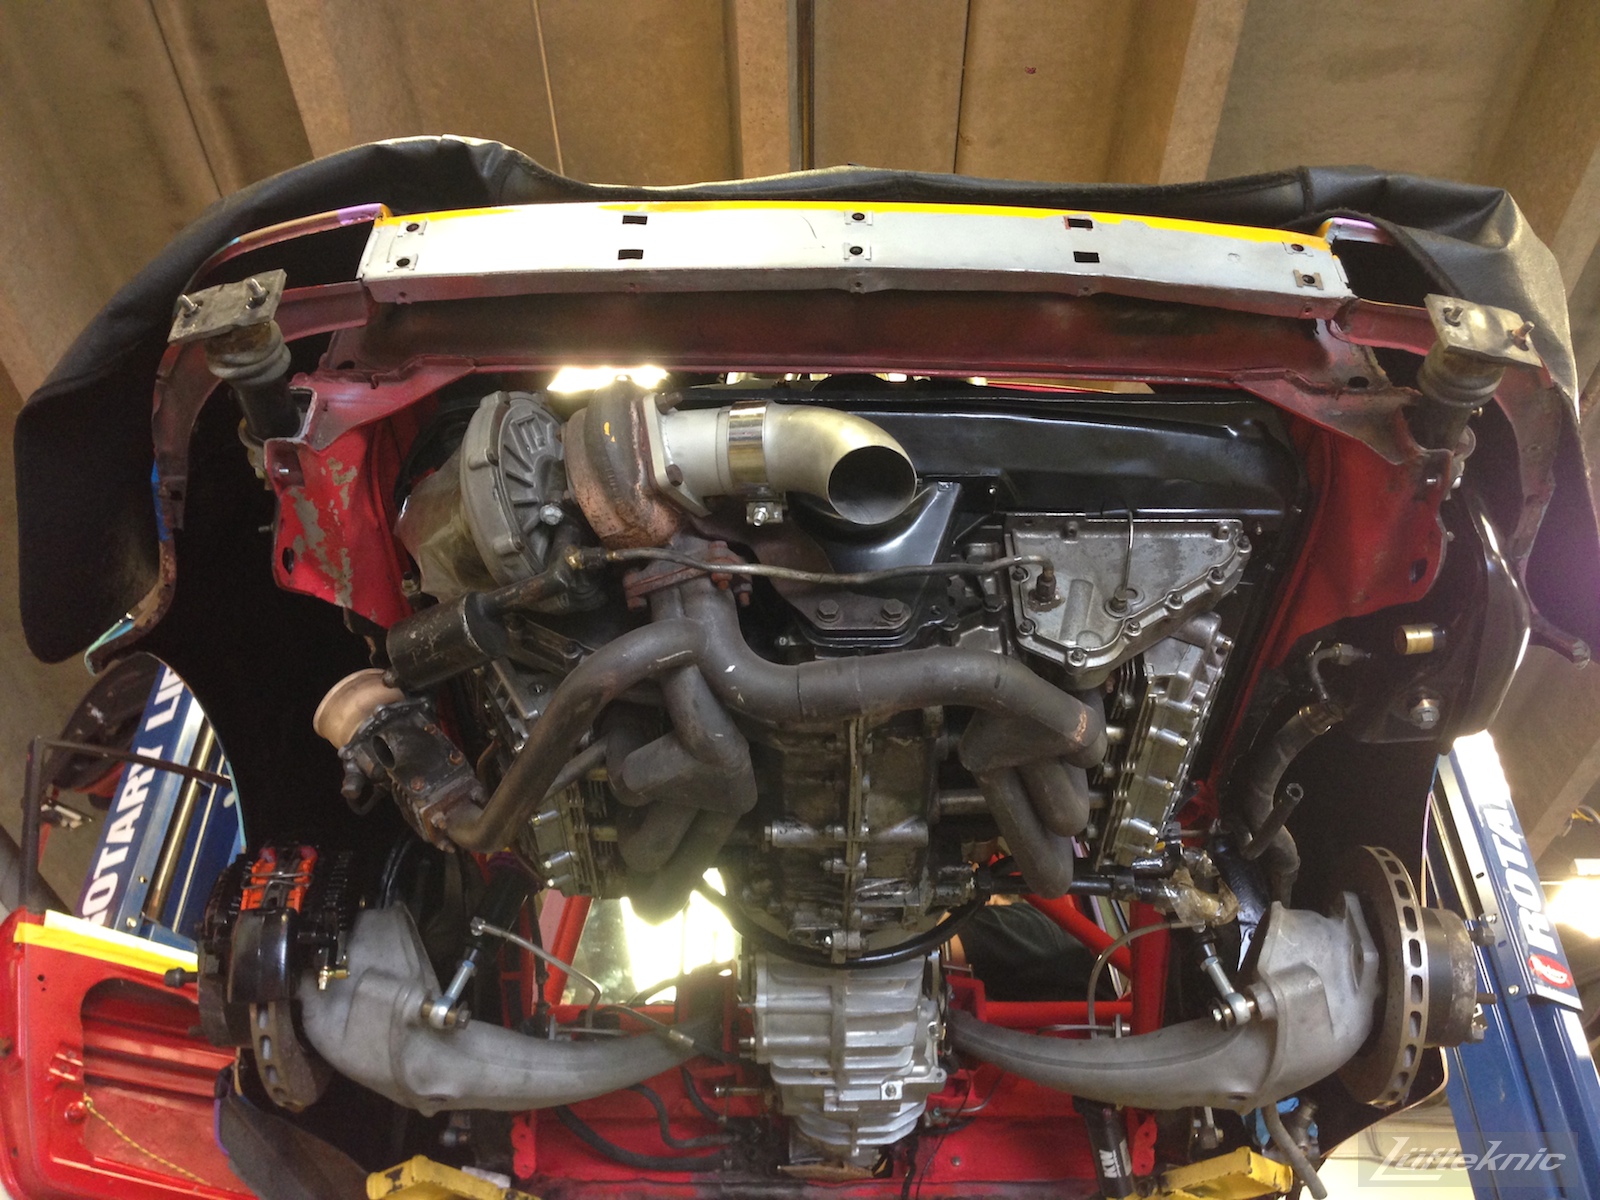 Test fit of engine in the Lüfteknic #projectstuka Porsche 930 Turbo